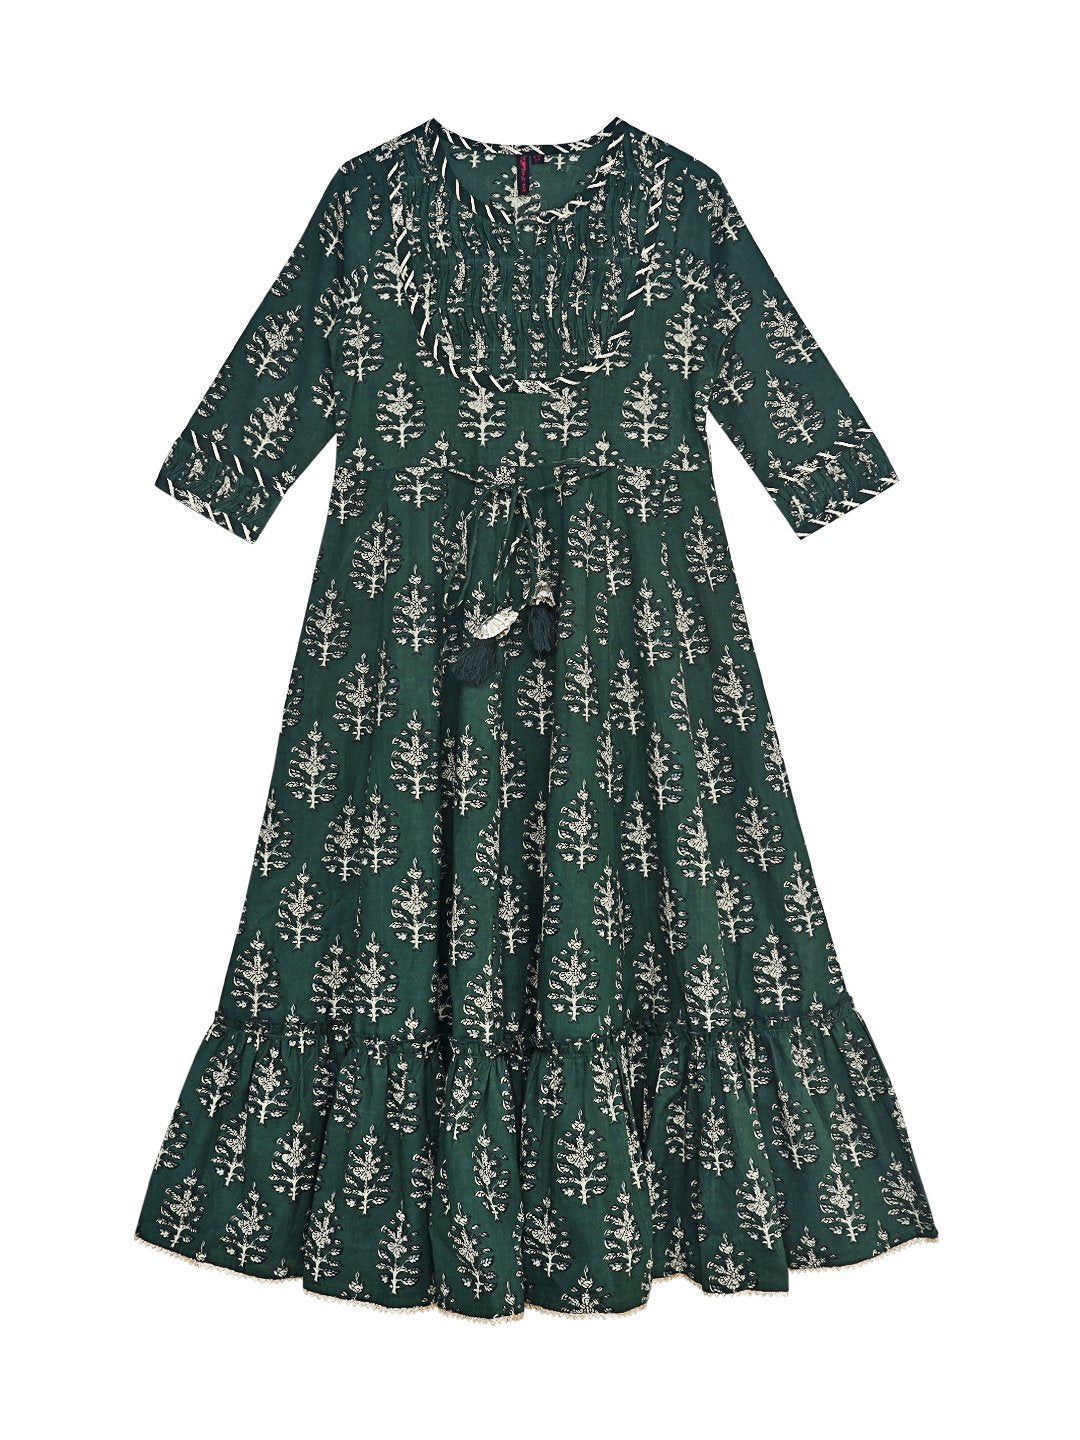 Ishin Girls Green Block Printed Tiered Dress